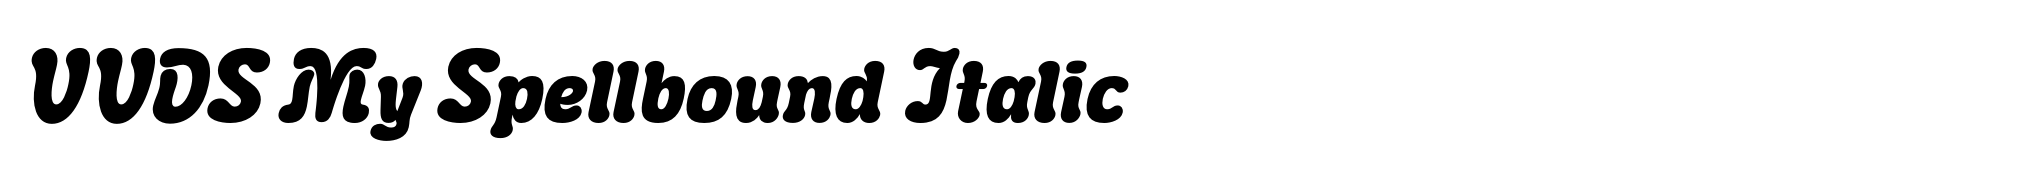 VVDS My Spellbound Italic image